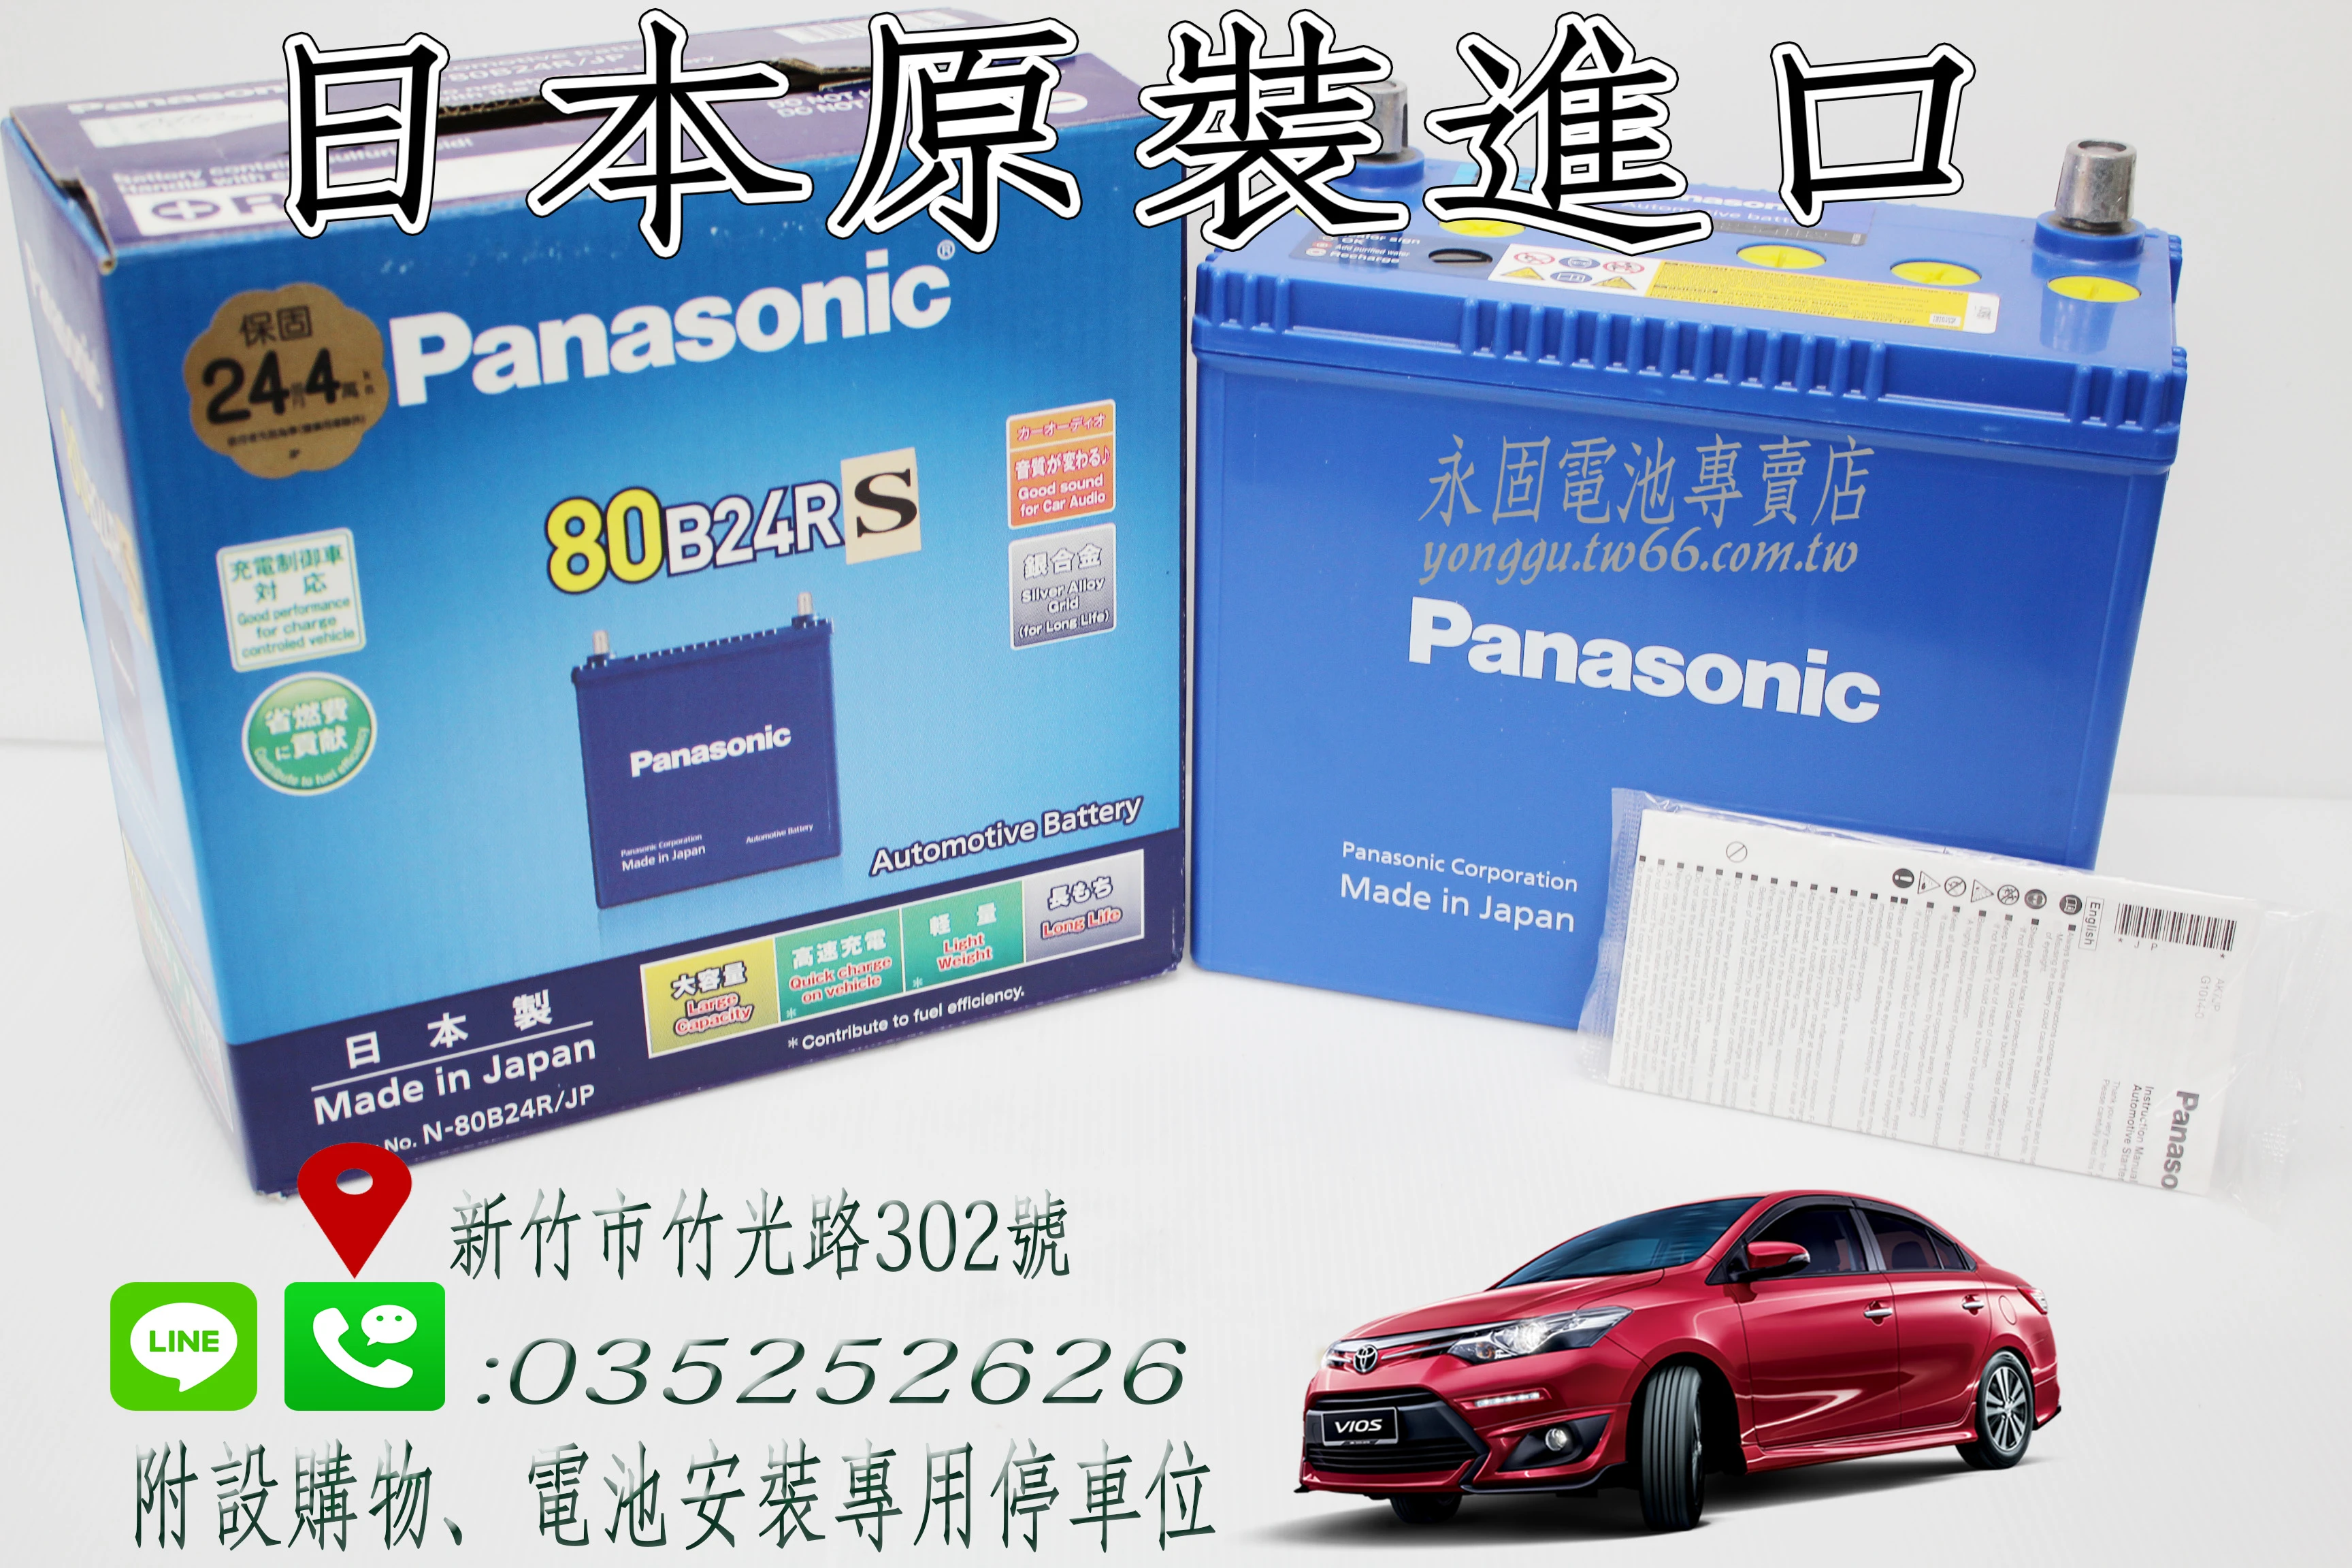 Panasonic 80B24R 新竹汽車電池 日本原裝 銀合金 藍電 46B24R 55B24R 新竹永固電池專賣店